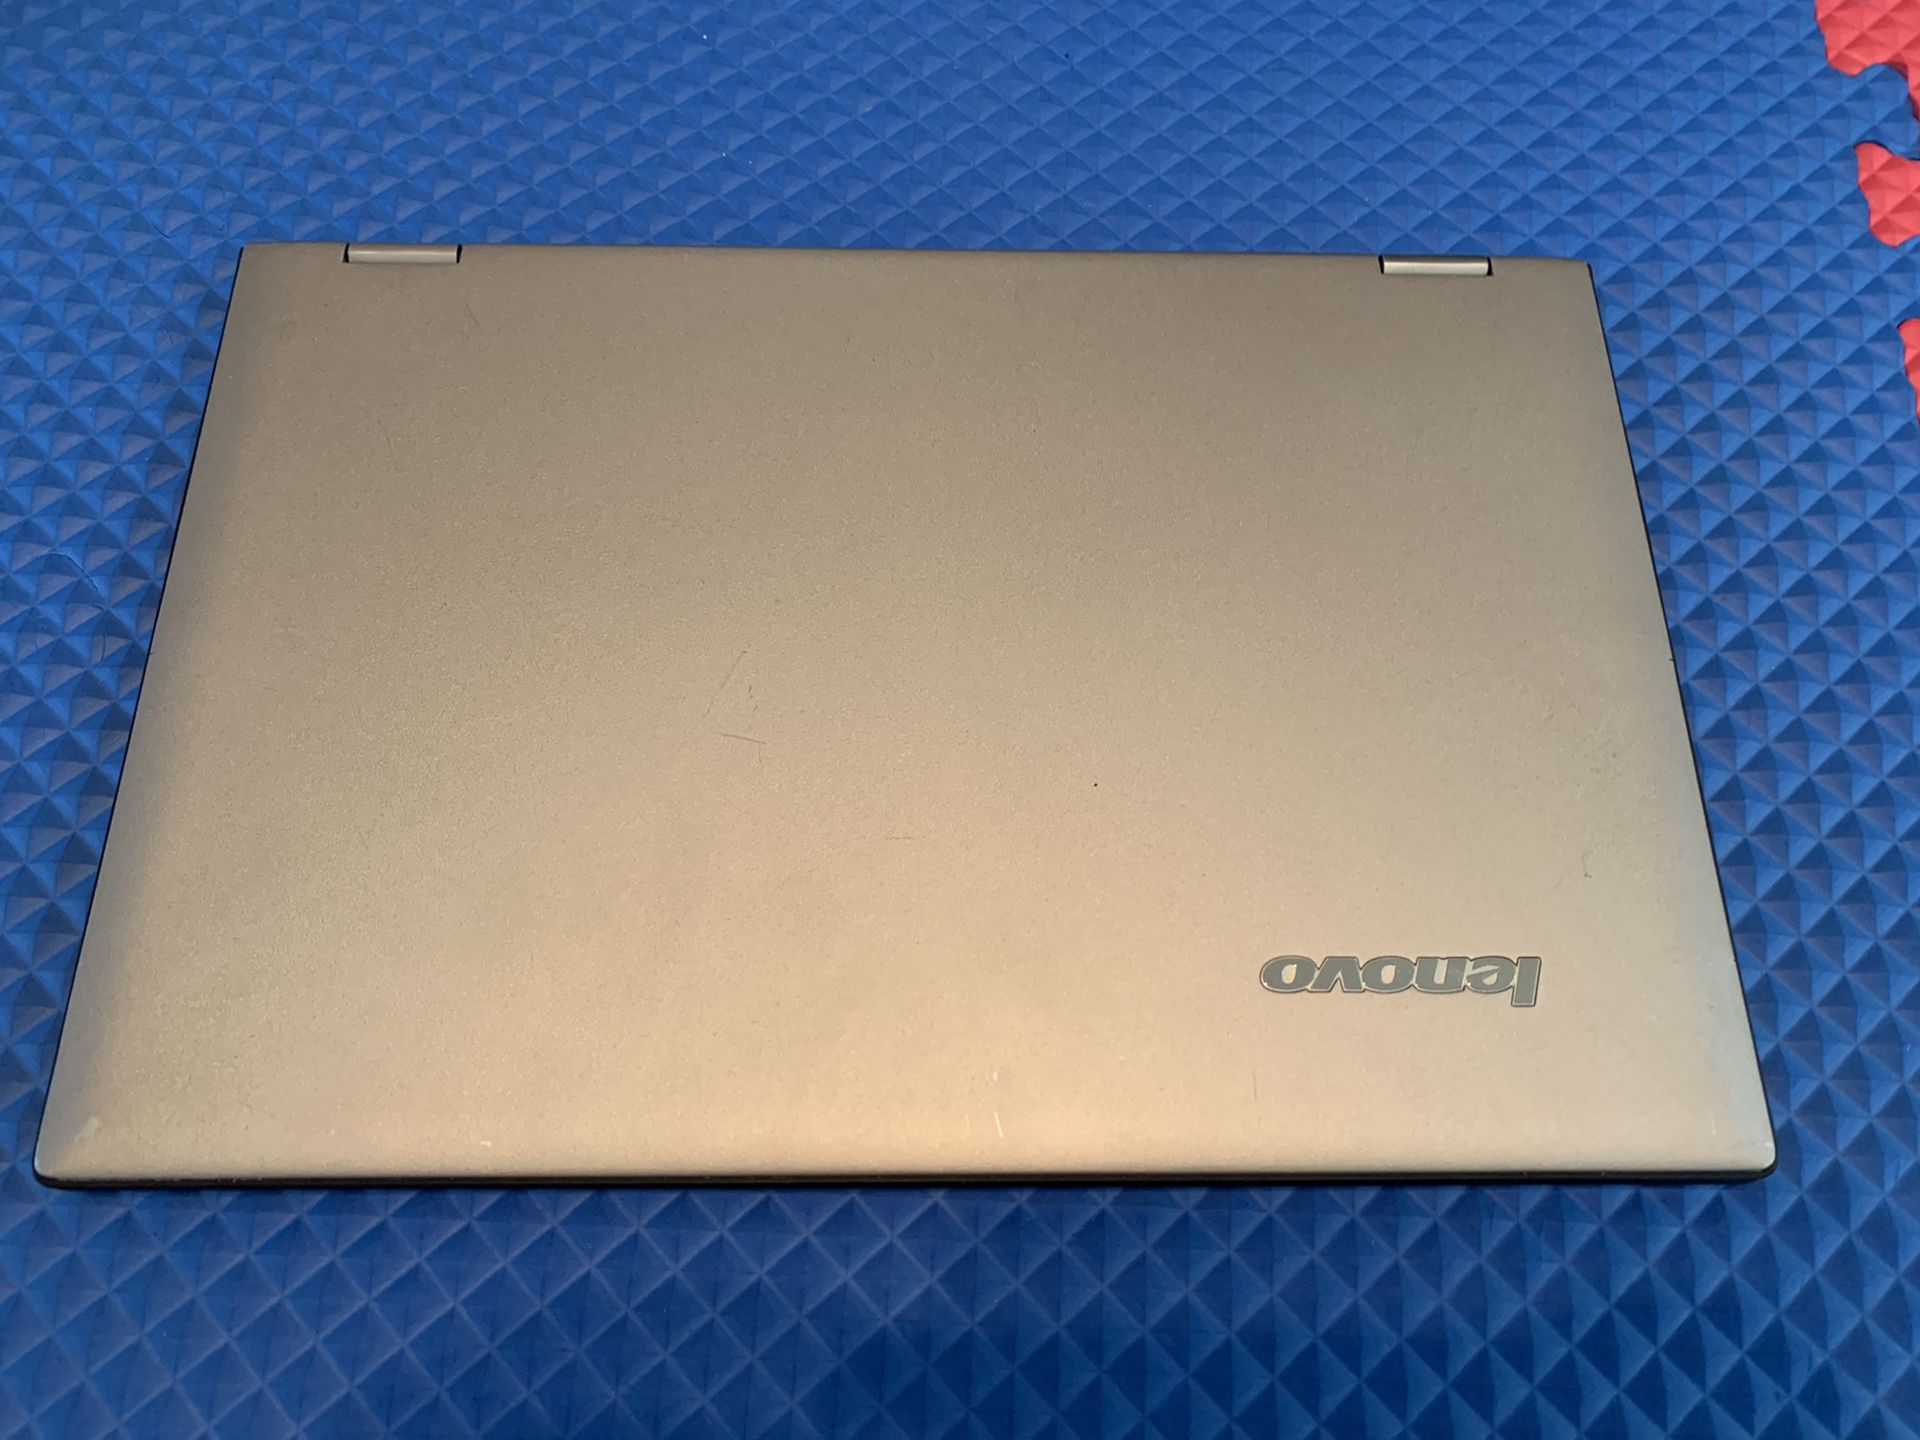 Lenovo Yoga 2 Pro (2014) - i7 Ultrabook laptop. Lightweight